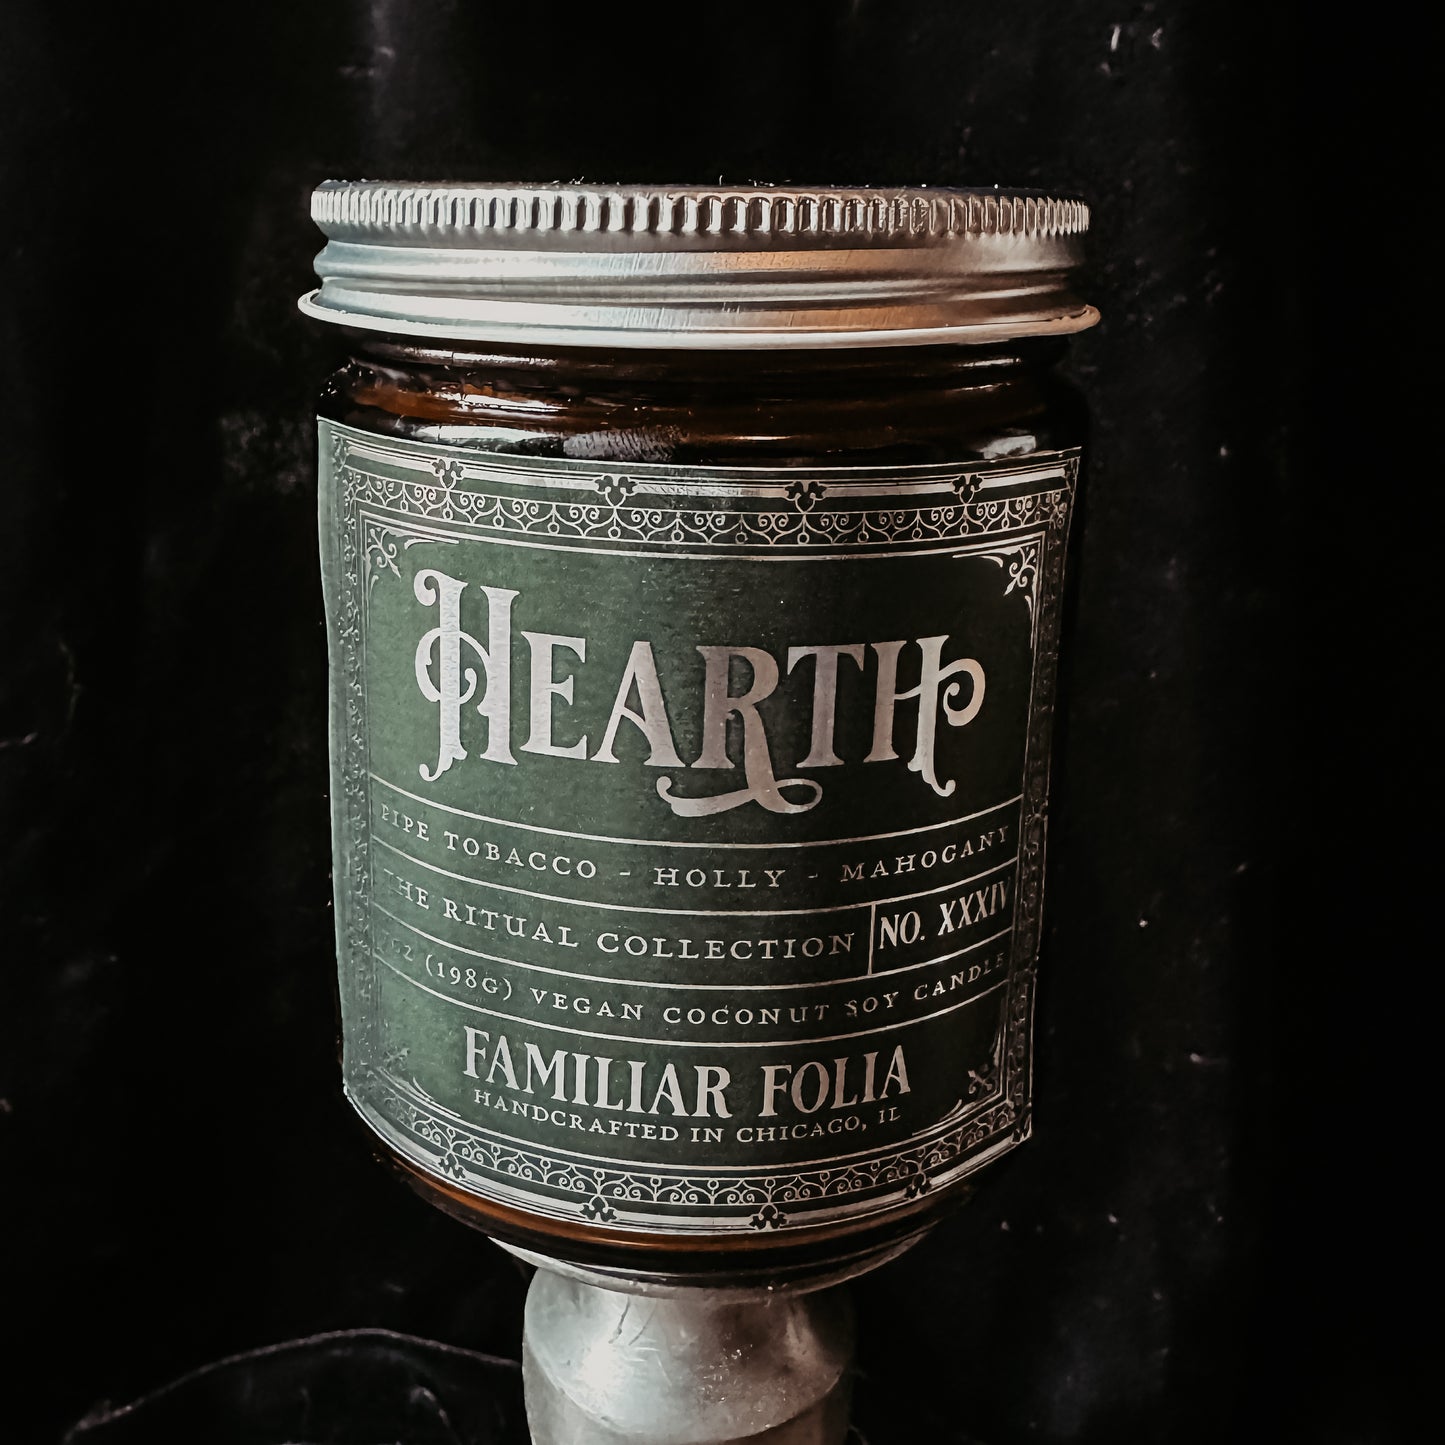 Hearth (Pipe Tobacco & Holly)